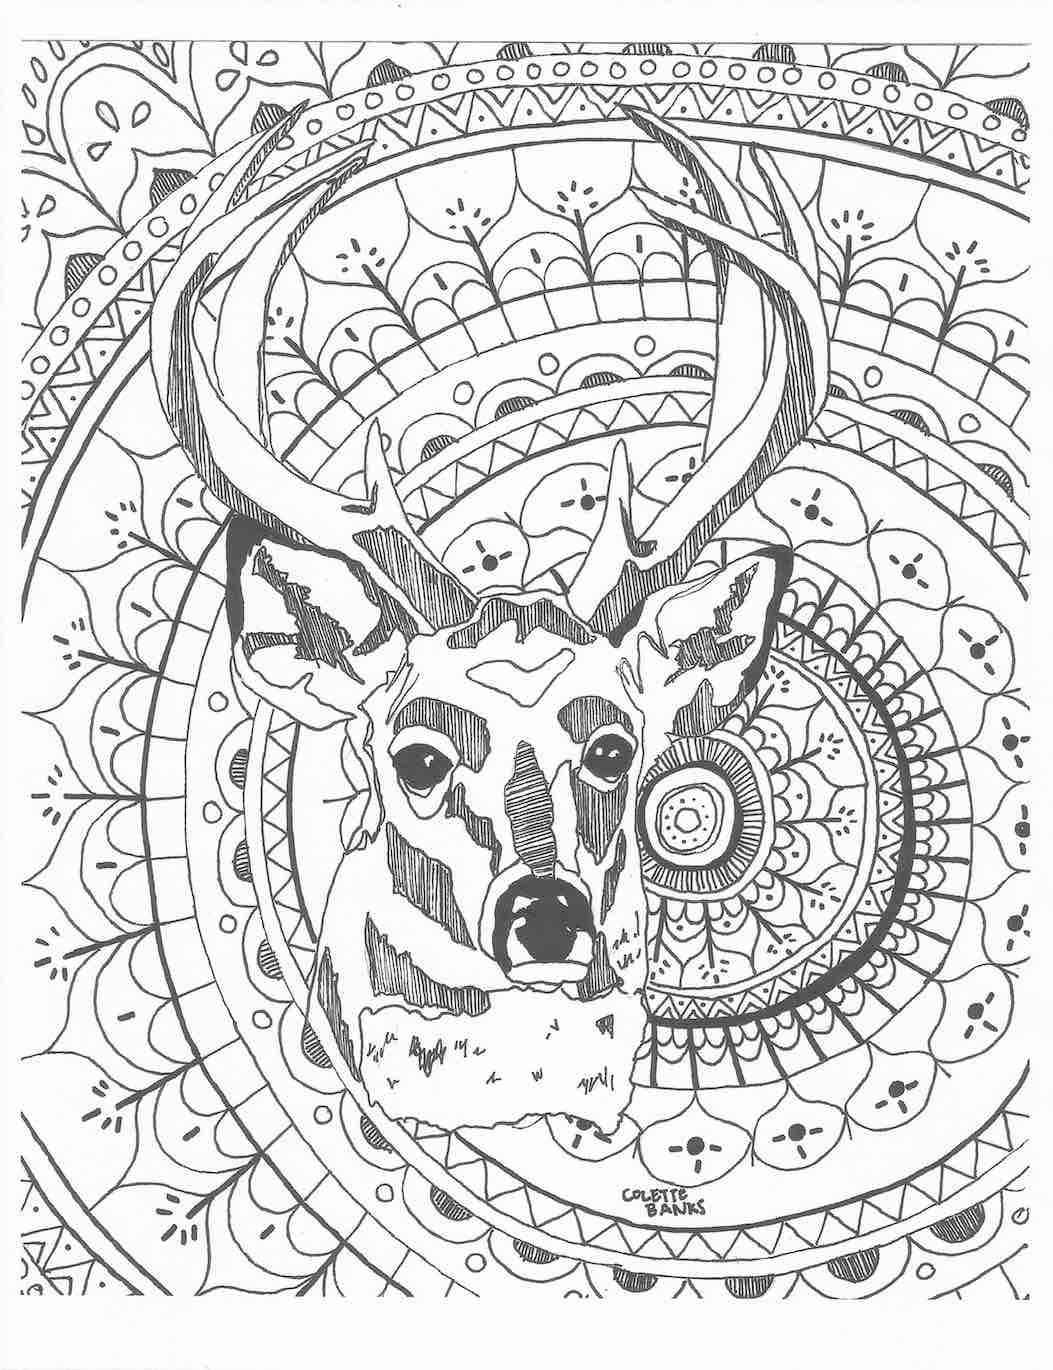 Deer Coloring Pages For Adults
 Mandala Adult Coloring Page Deer Digital Print by EssenceofInk